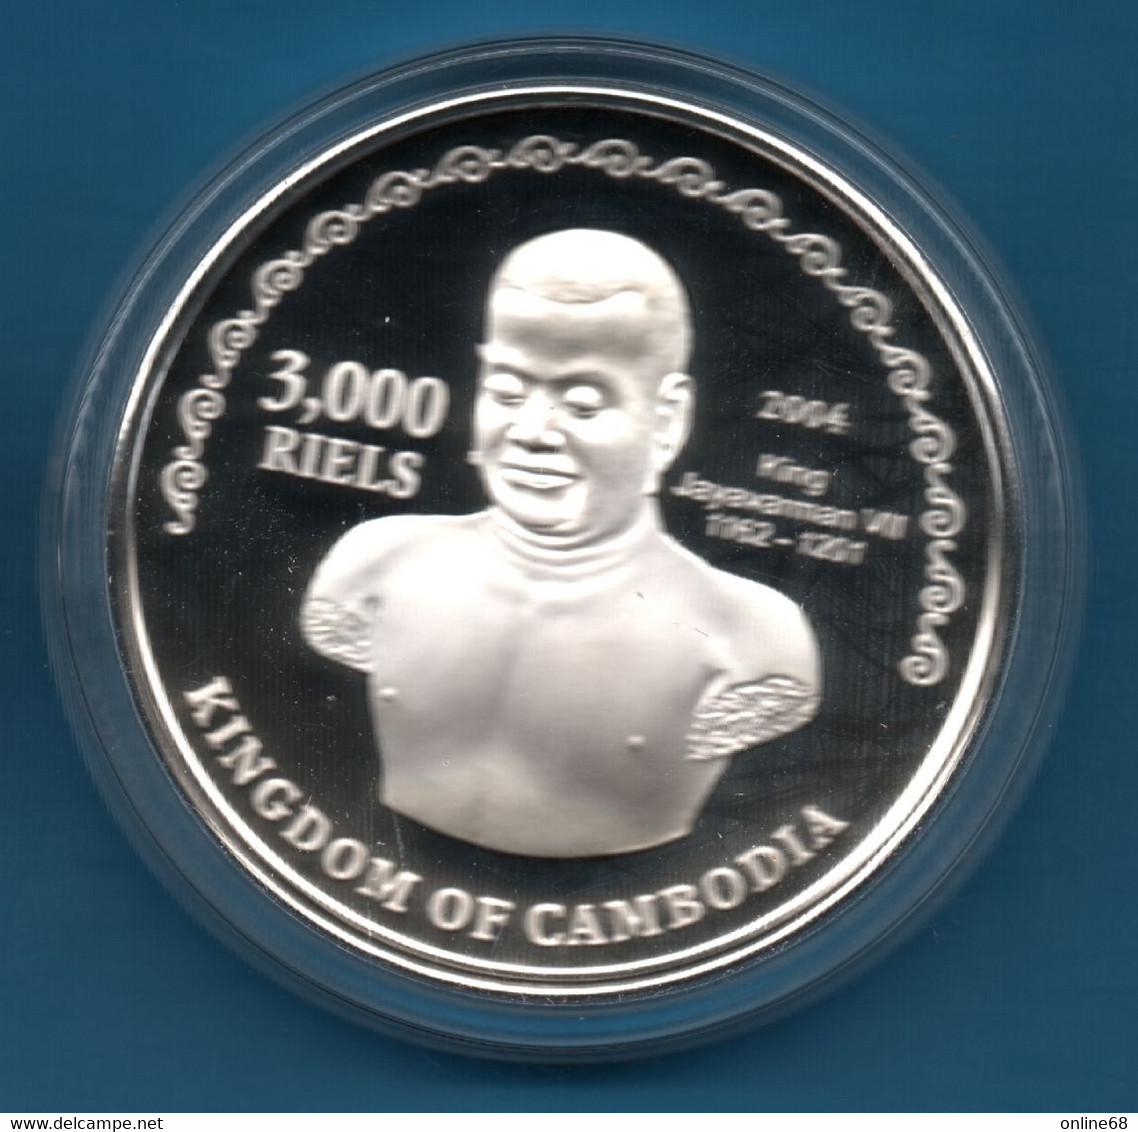 CAMBODIA 3000 RIELS 2004 KM# 139 Silver .999 Argent 2006 FOOTBALL World Cup KING JAYAVAIMAN VII - Camboya